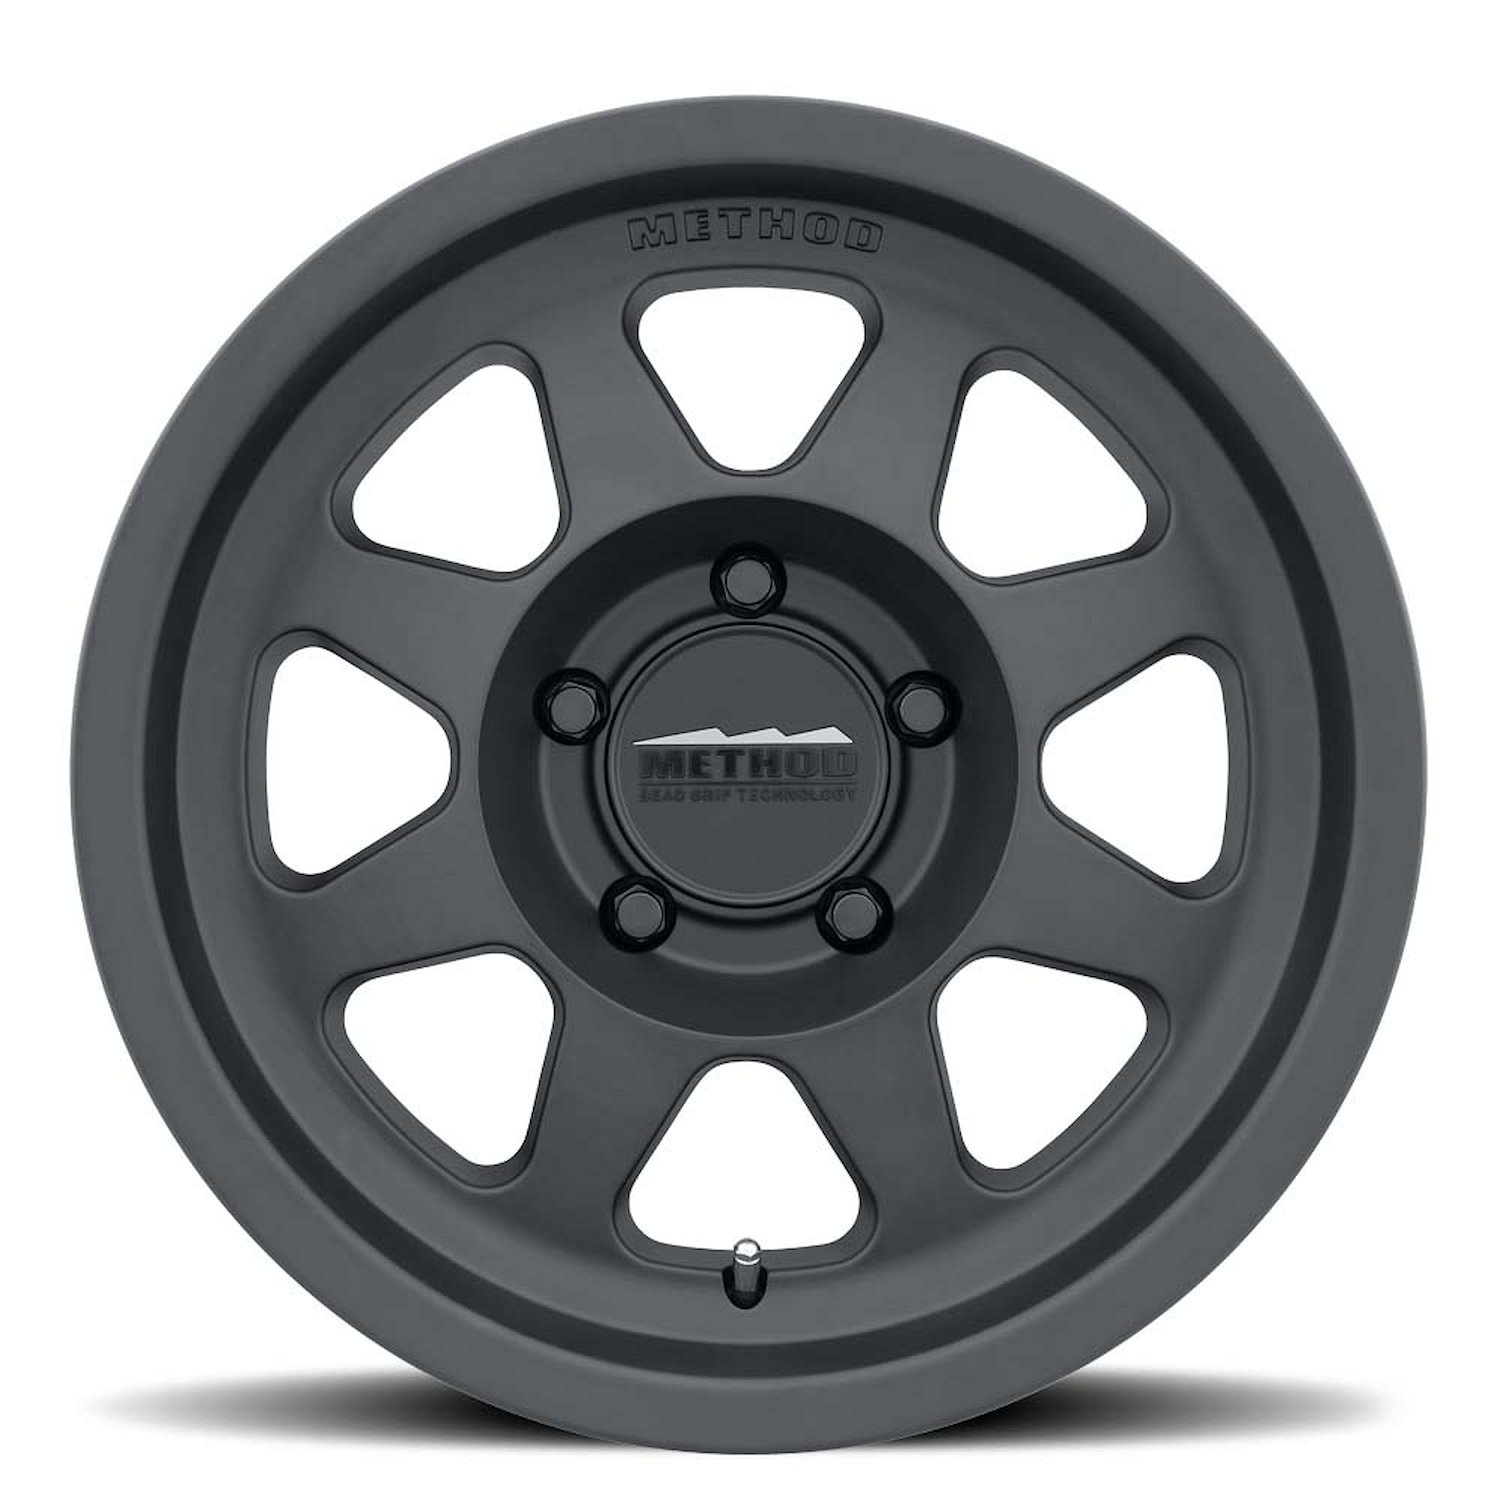 MR70177554530 TRAIL MR701 Bead Grip Wheel [Size: 17" x 7.5"] Matte Black